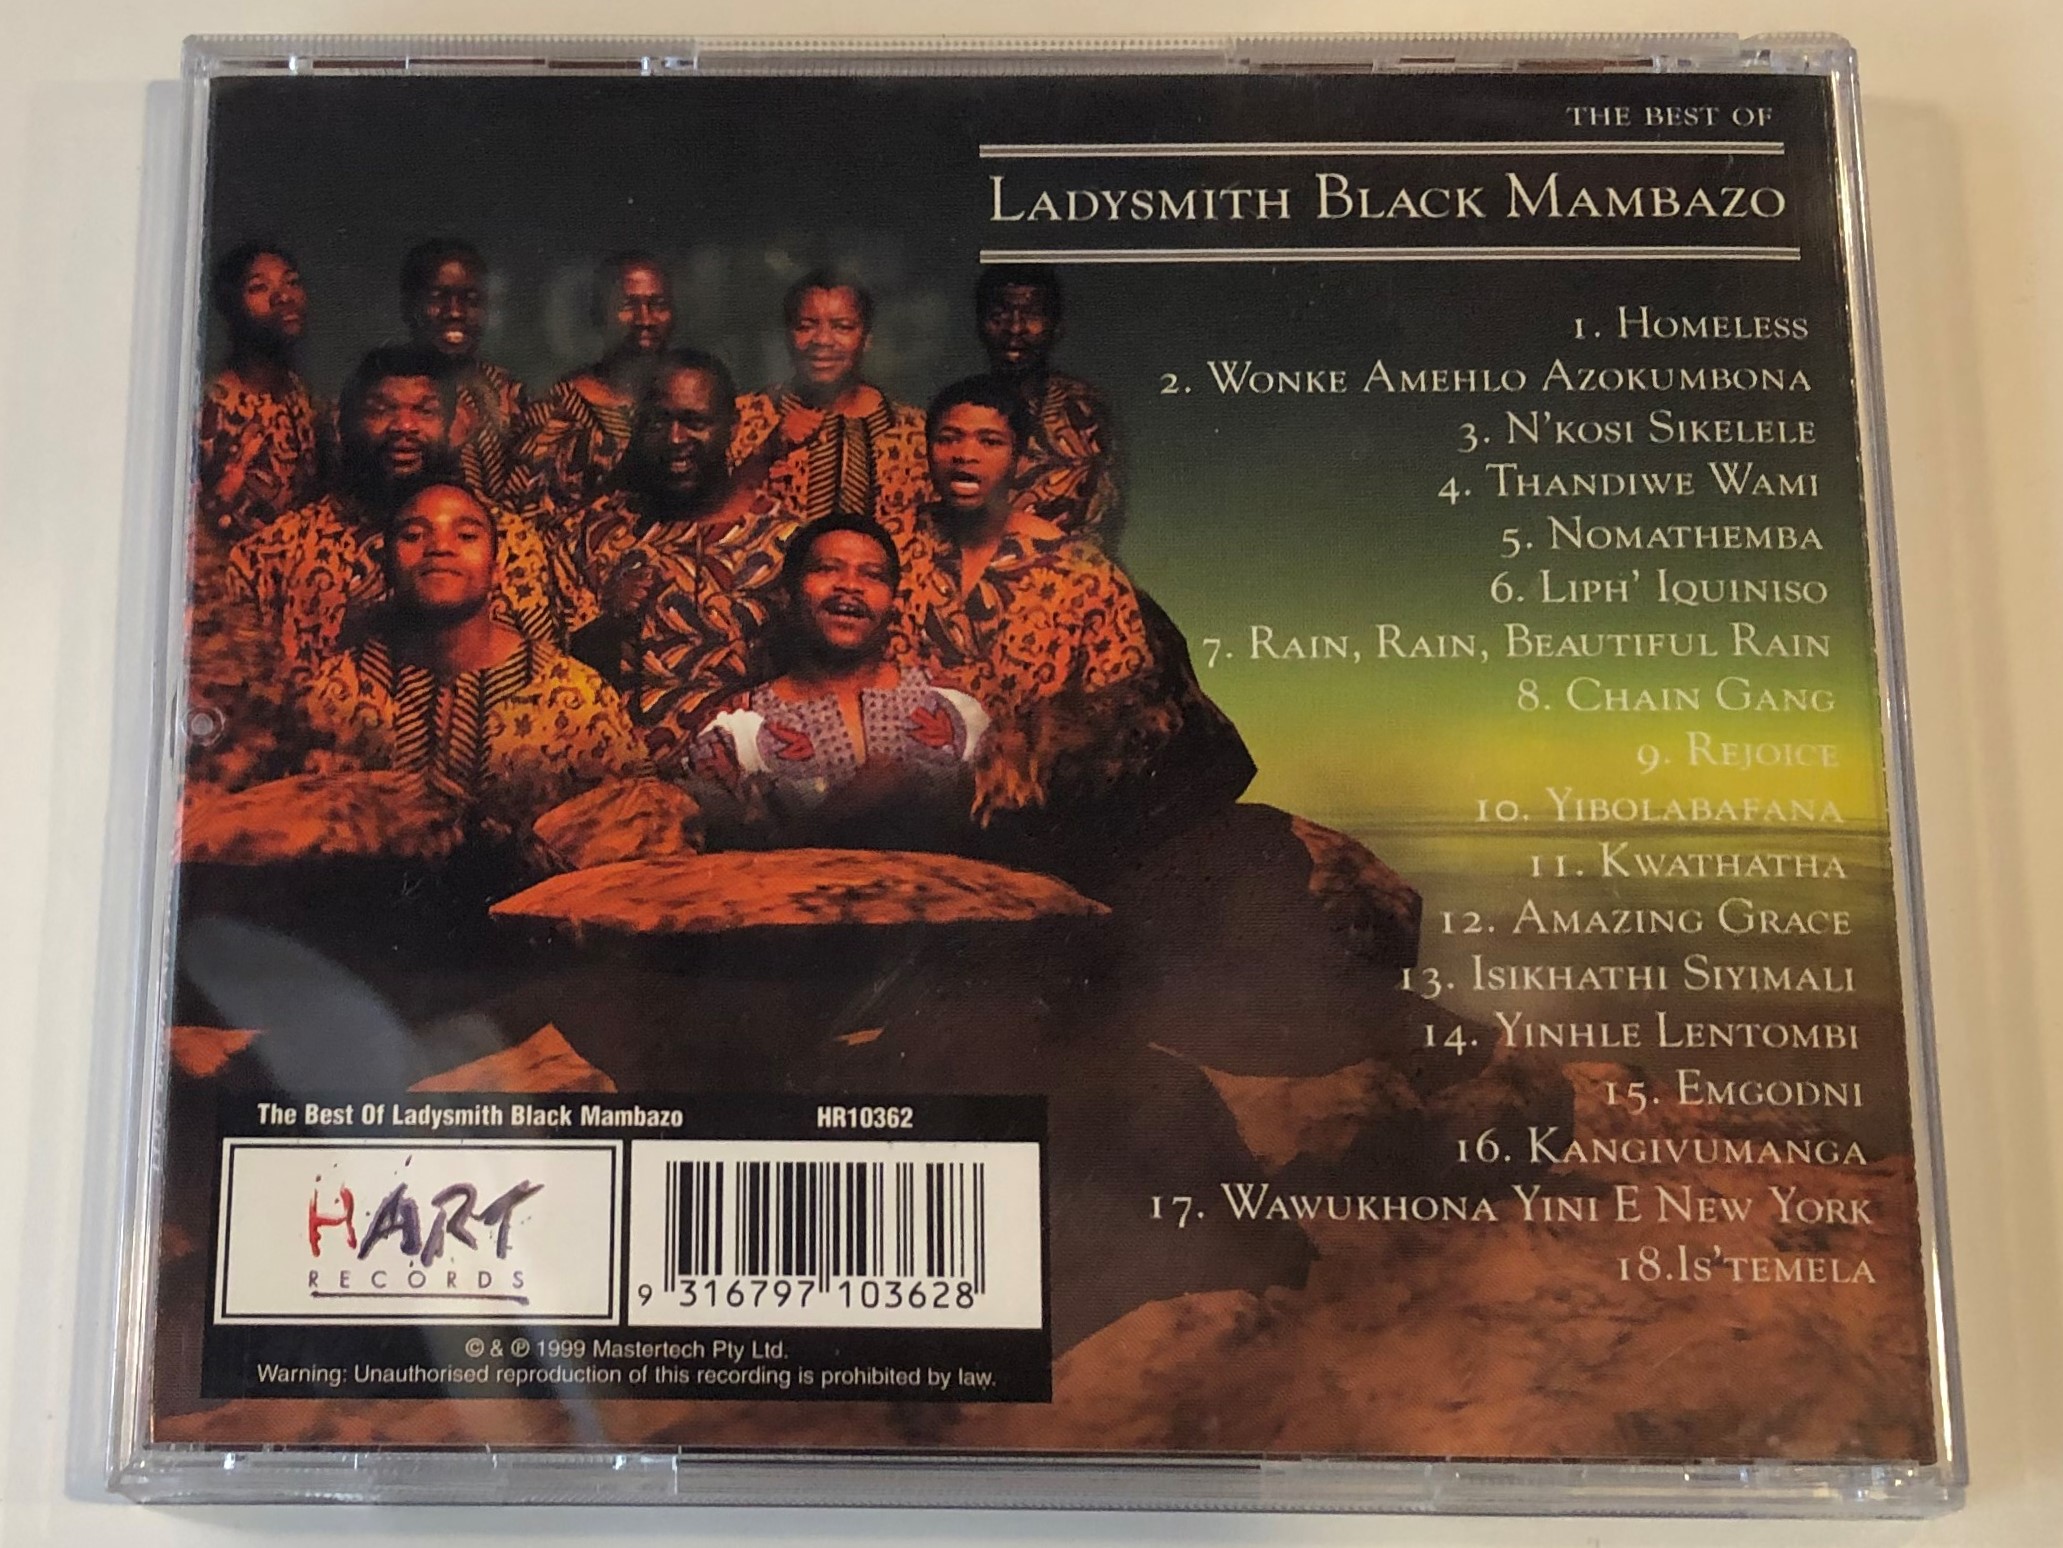 the-best-of-ladysmith-black-mambazo-hart-records-audio-cd-1999-hr10362-2-.jpg